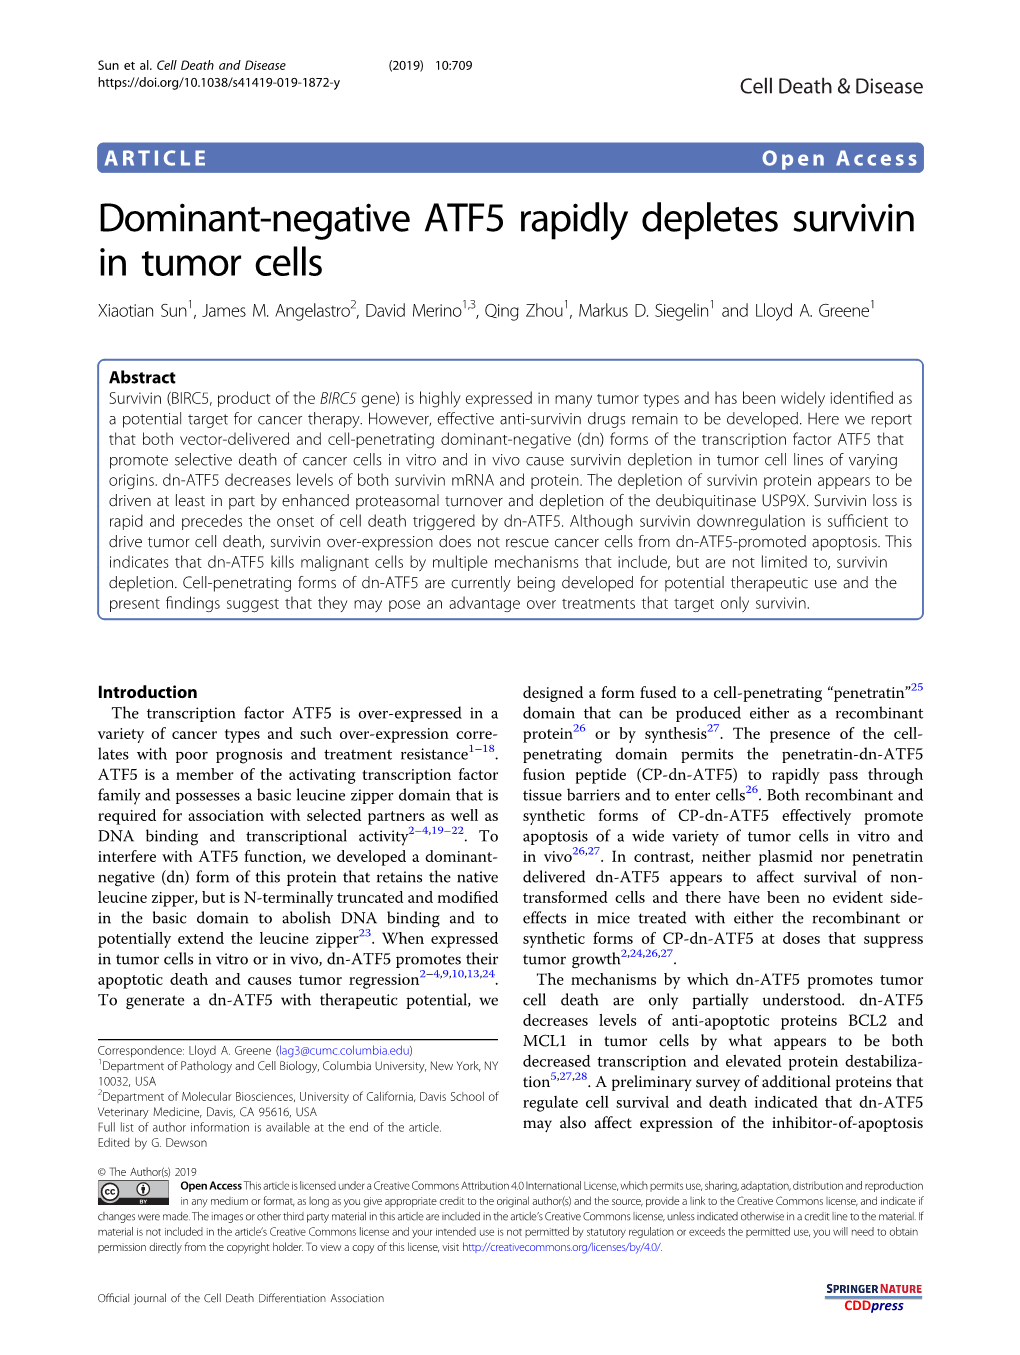 Dominant-Negative ATF5 Rapidly Depletes Survivin in Tumor Cells Xiaotian Sun1,Jamesm.Angelastro2,Davidmerino1,3, Qing Zhou1, Markus D